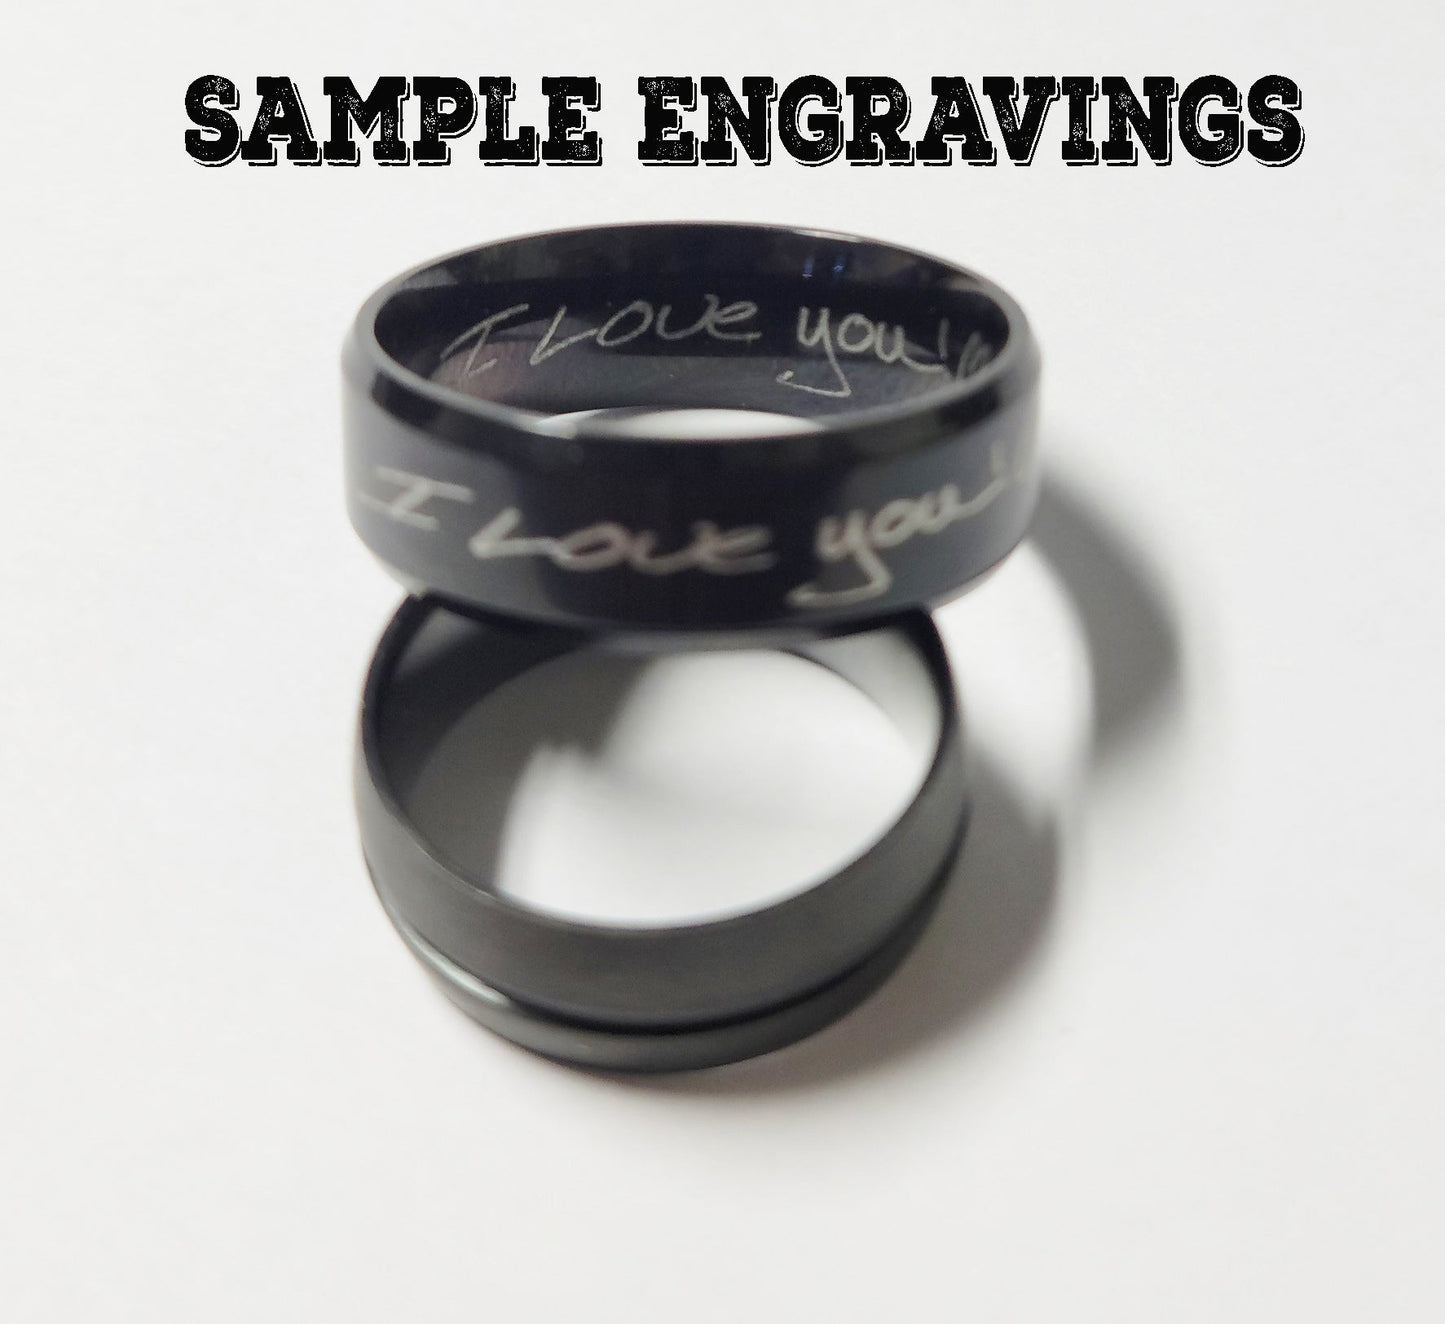 ThinkEngraved Engraved Ring Personalized Men's Gold Promise Ring - Engraved Men's Ring Handwriting Ring